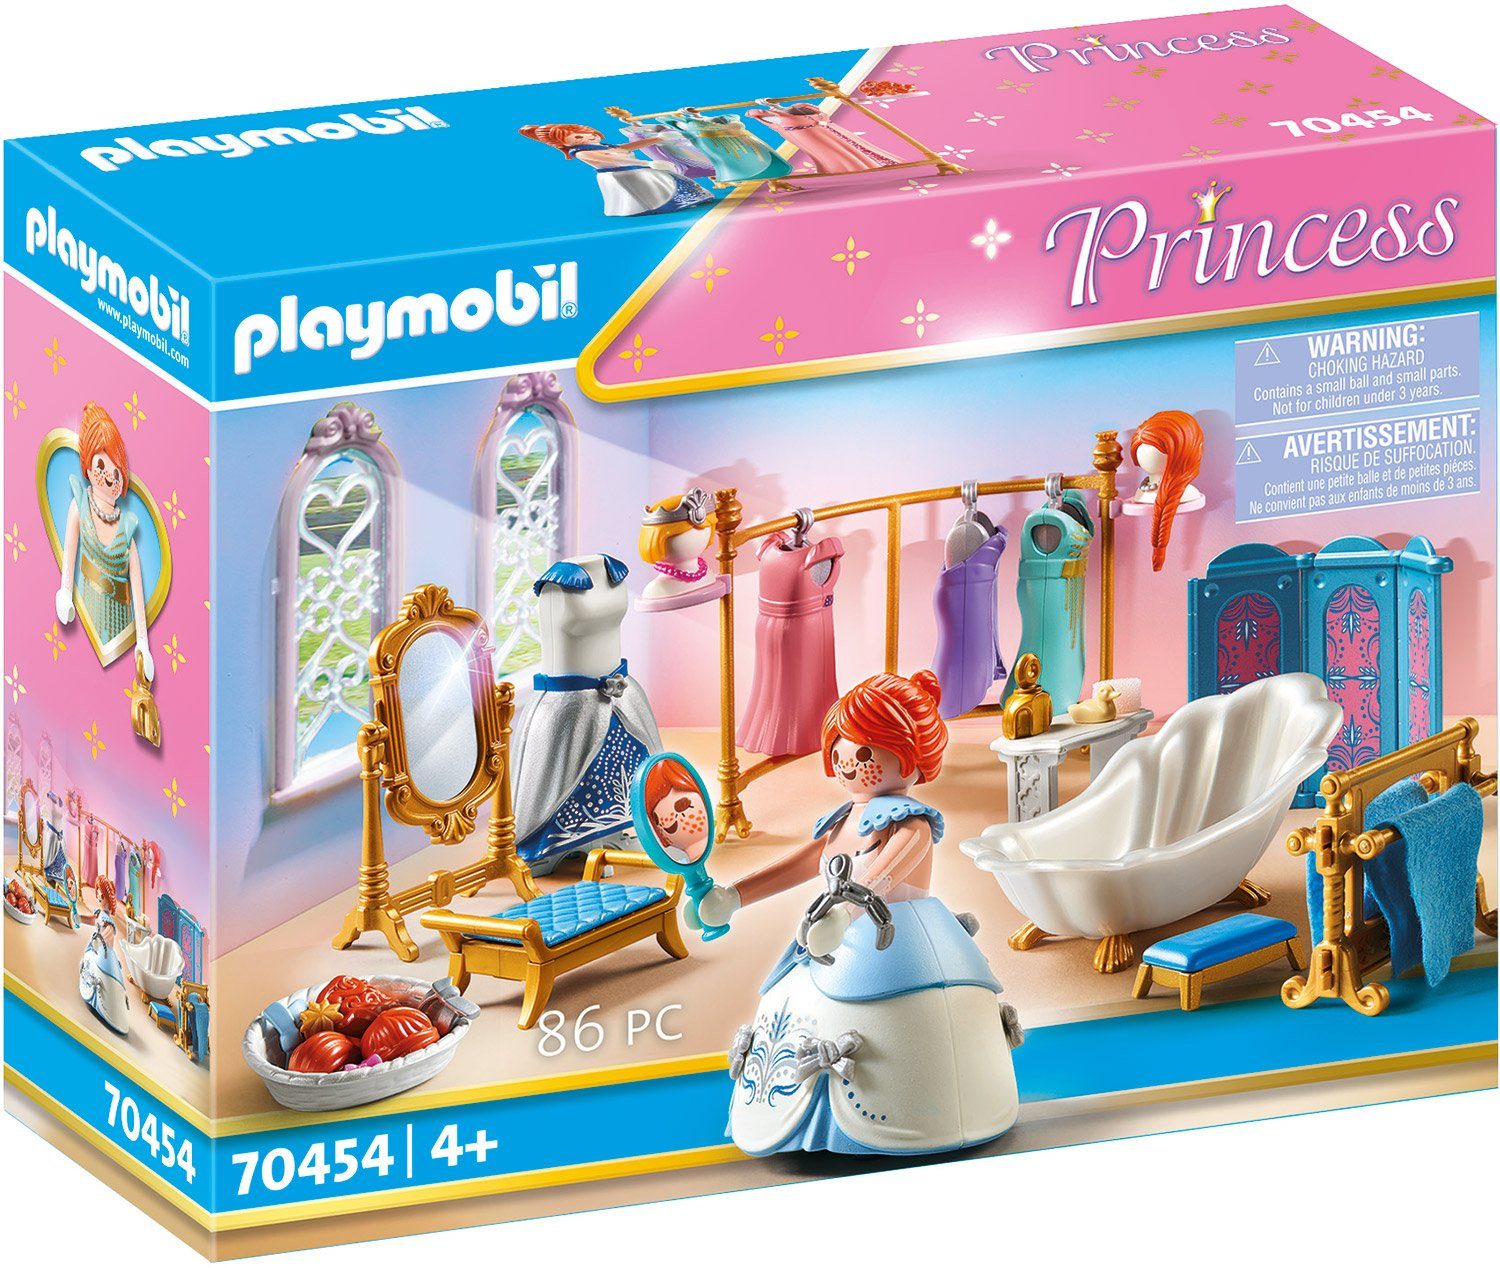 Playmobil® Konstruktions-Spielset Ankleidezimmer mit St), in Made (86 Germany (70454), Princess, Badewanne